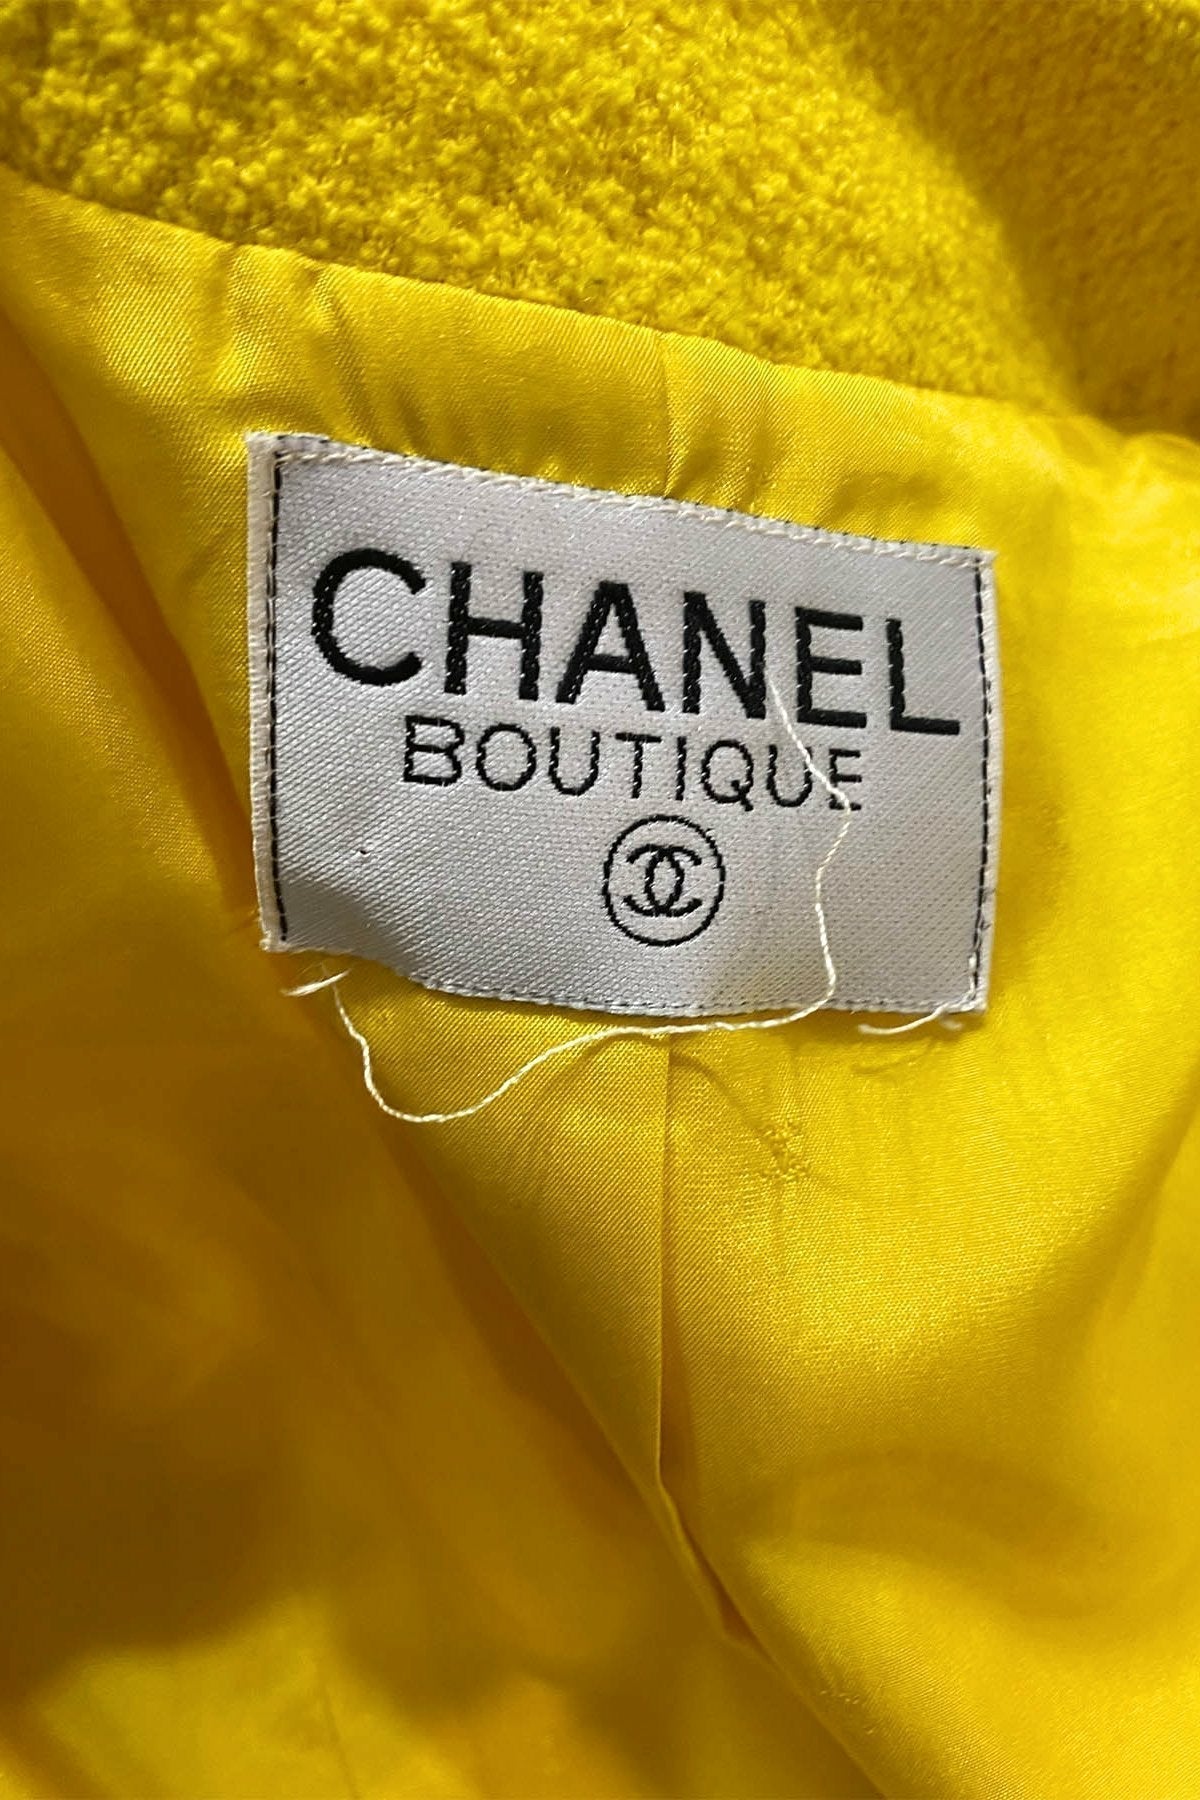 Chanel Boutique Iconic Jacket Vintage 1993 - Foxy Couture Carmel